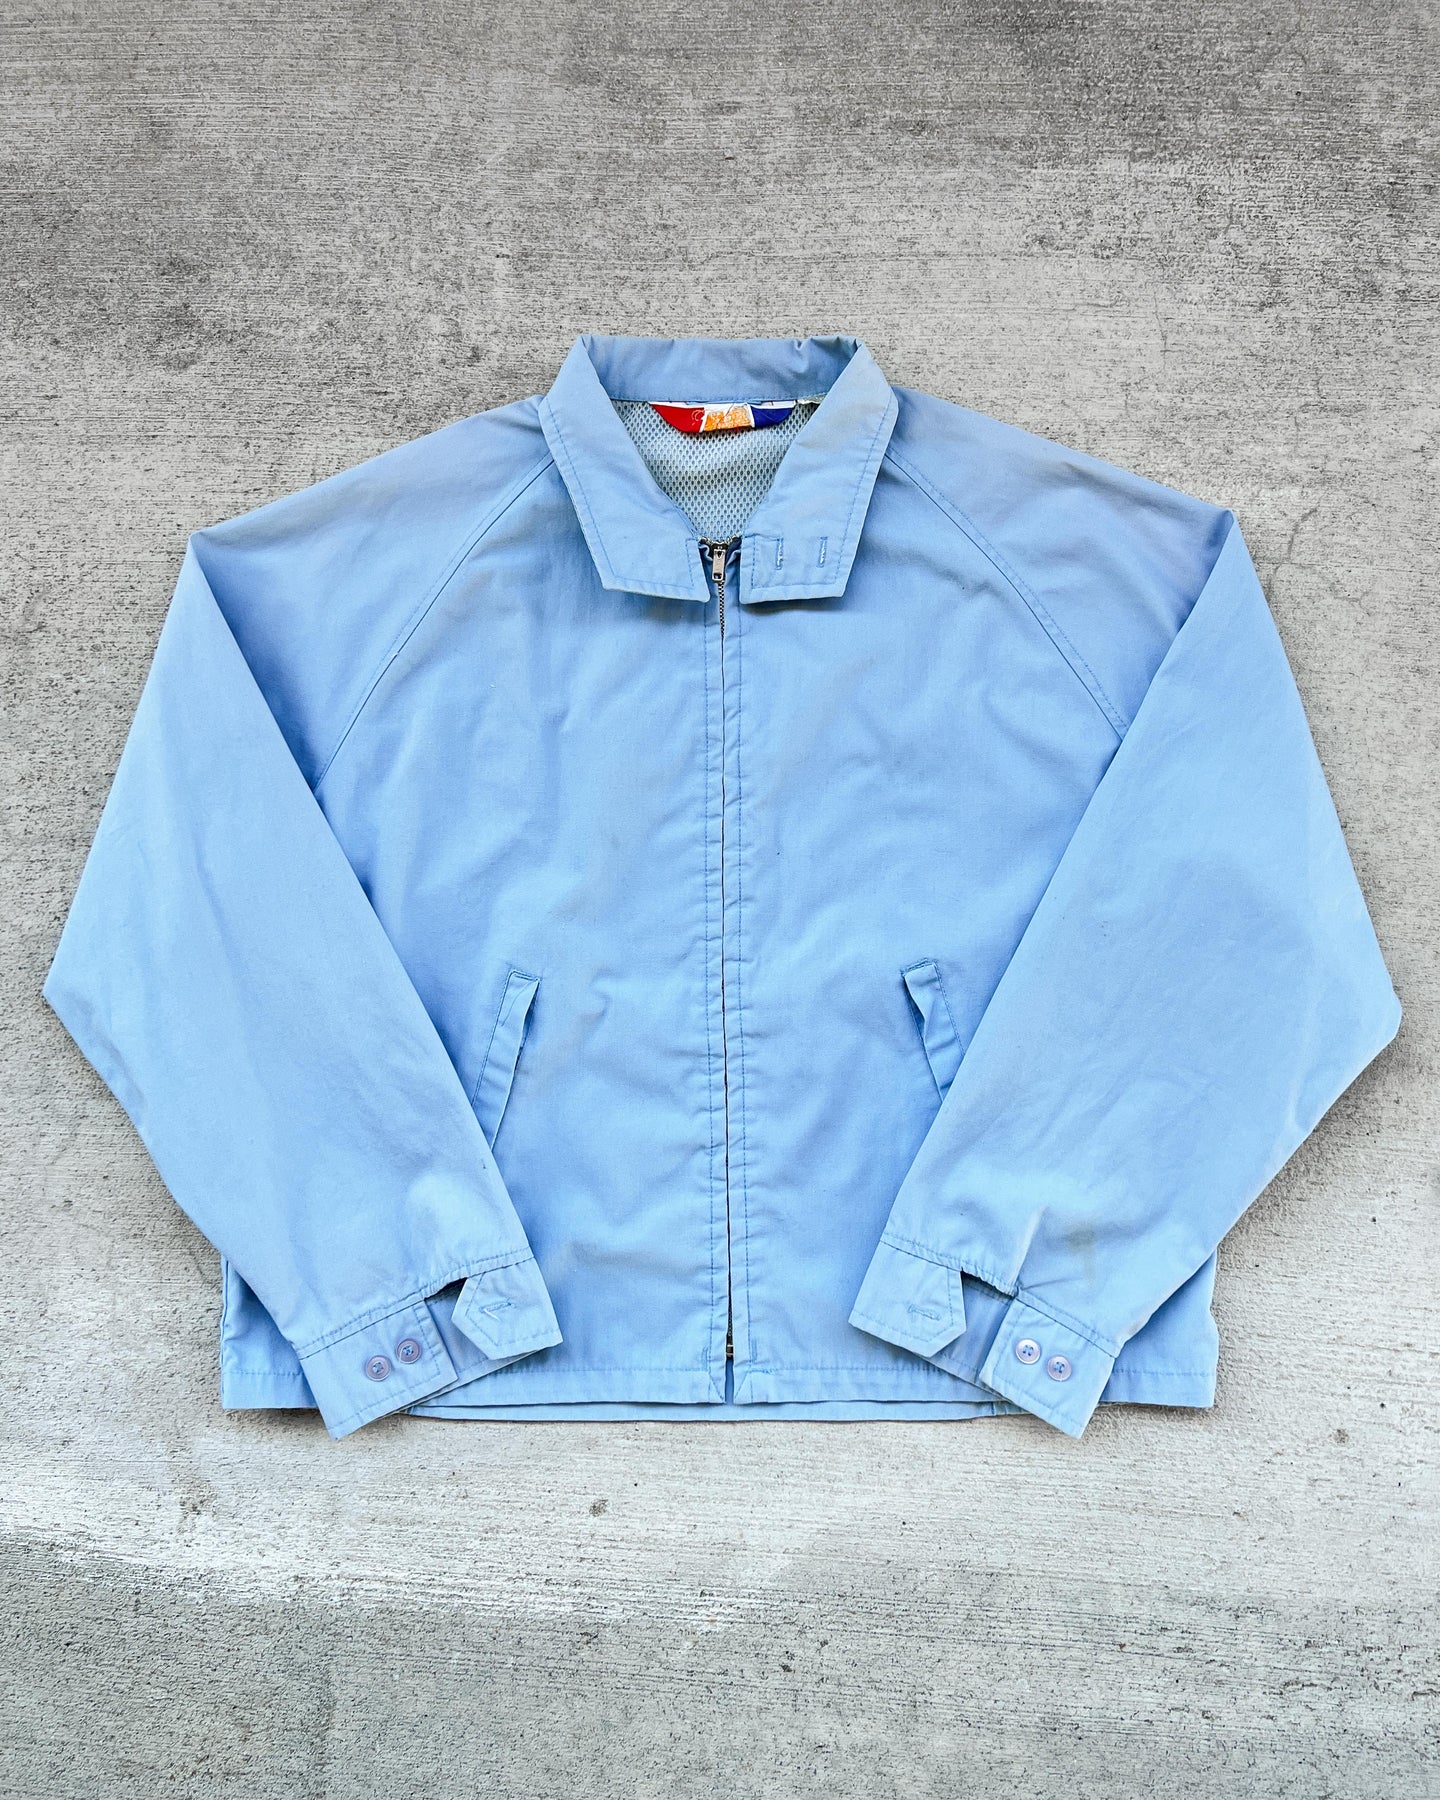 1980s Baby Blue Raglan Cut Harrington Jacket - Size Large